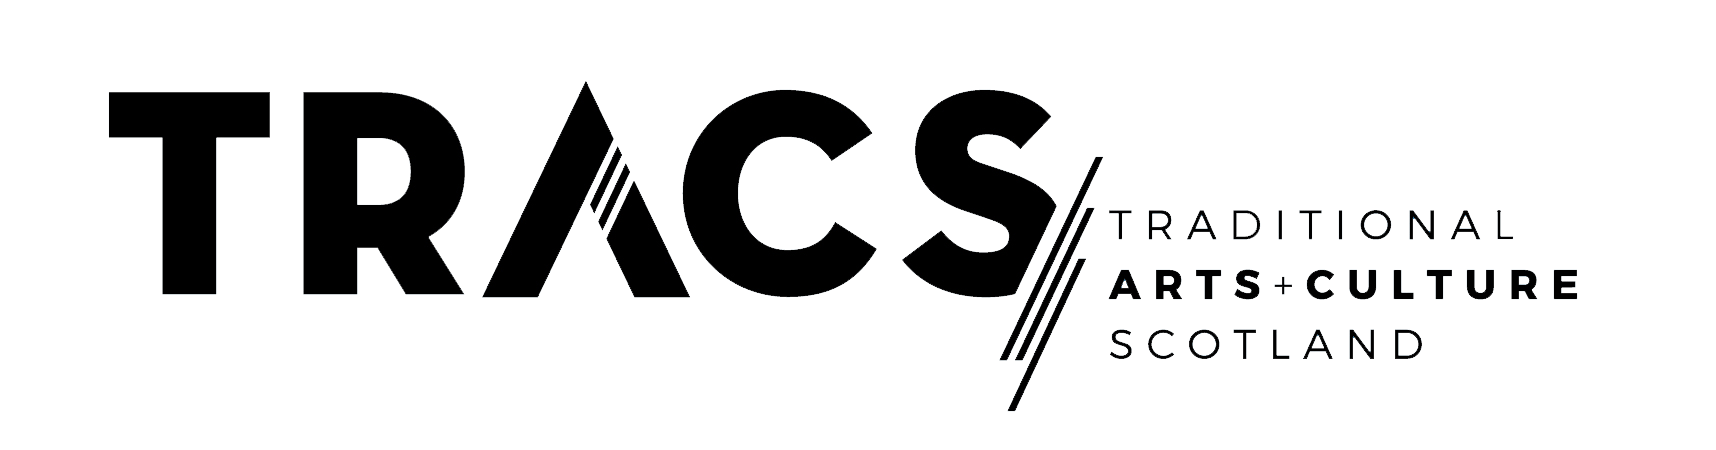 TRACS logo.png